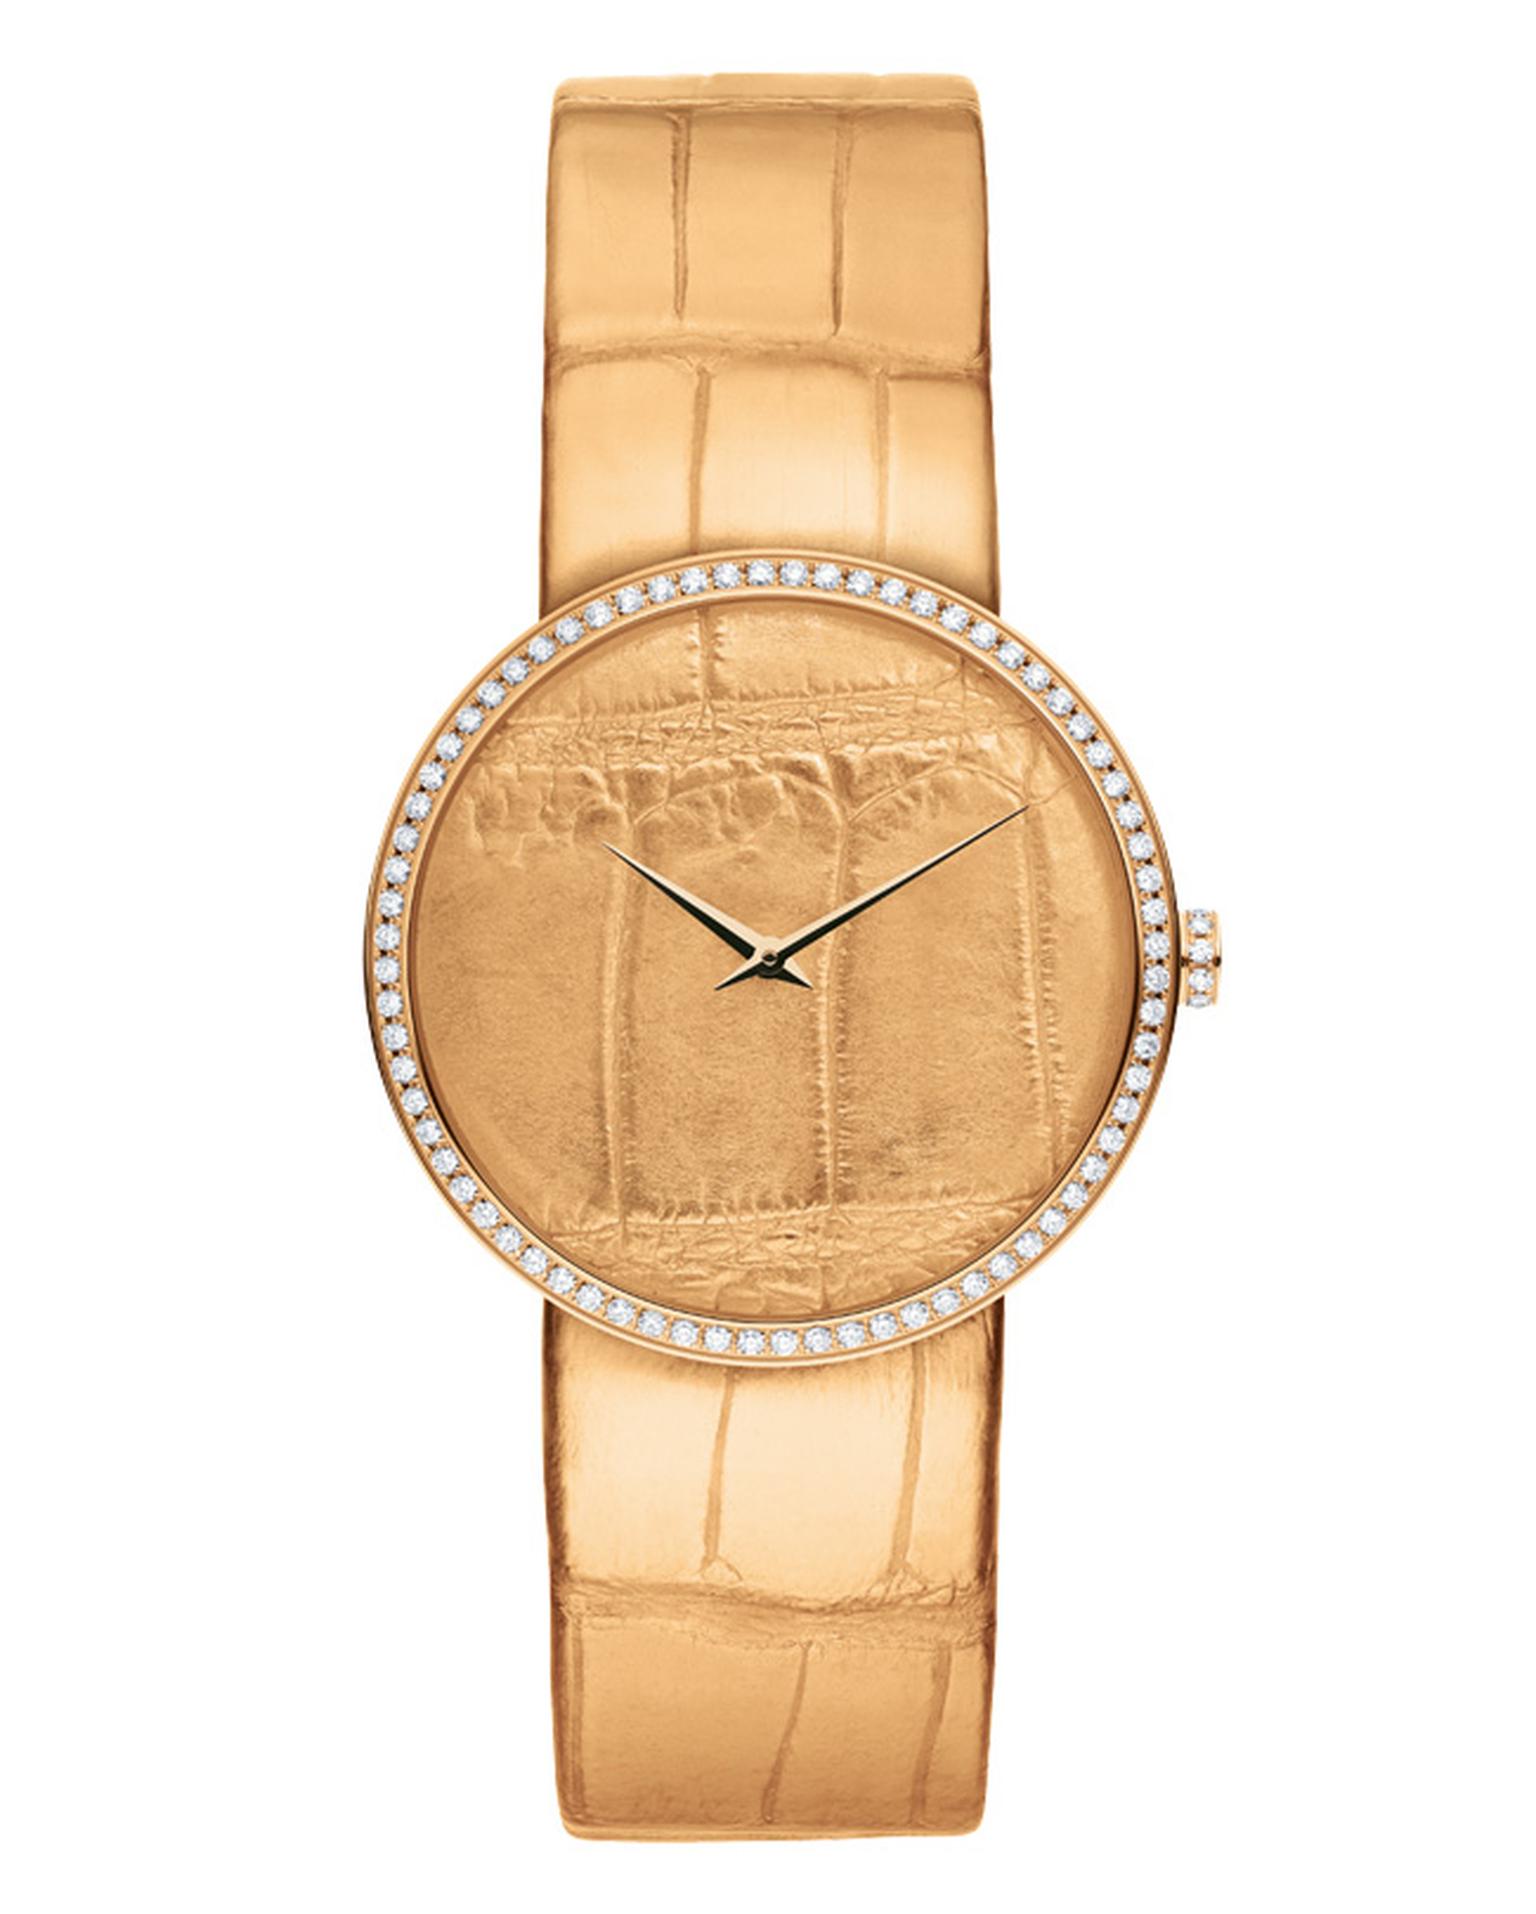 La-D-de-Dior-Alligator-watch-in-pink-gold-and-diamonds_20140512_Main